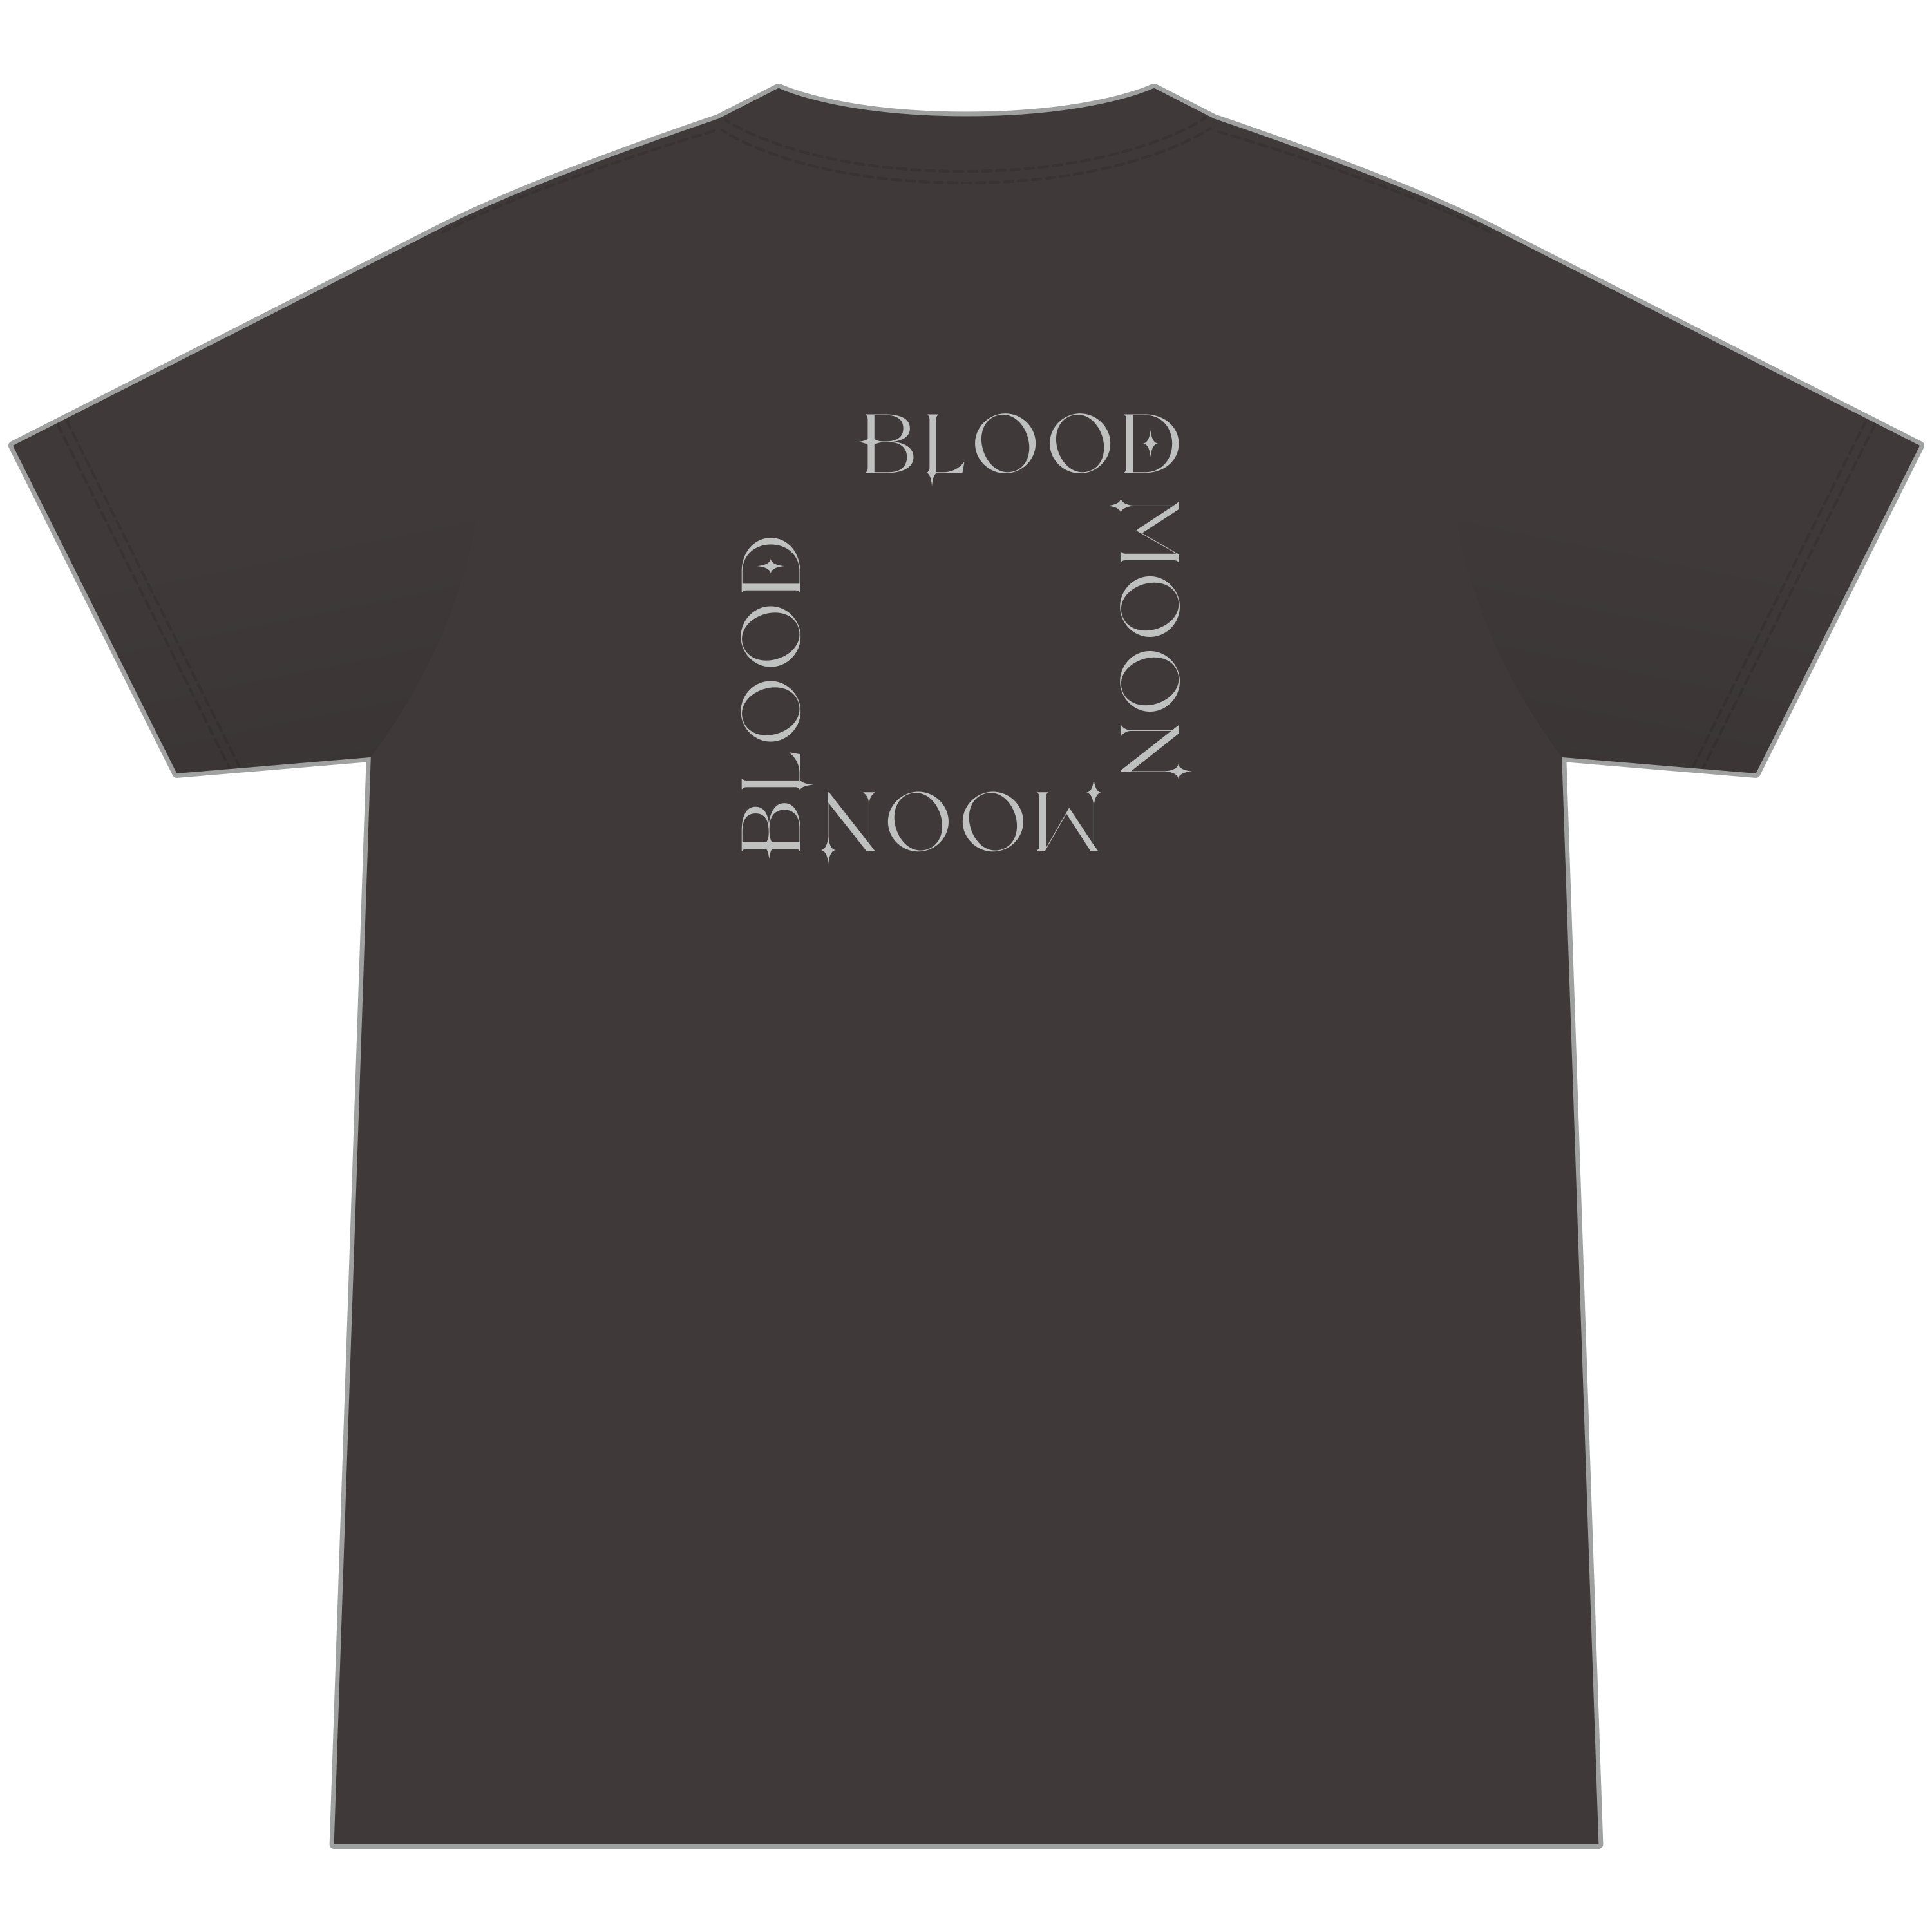 『2022 ONEUS JAPAN 3RD LIVE : BLOOD MOON』Tシャツ